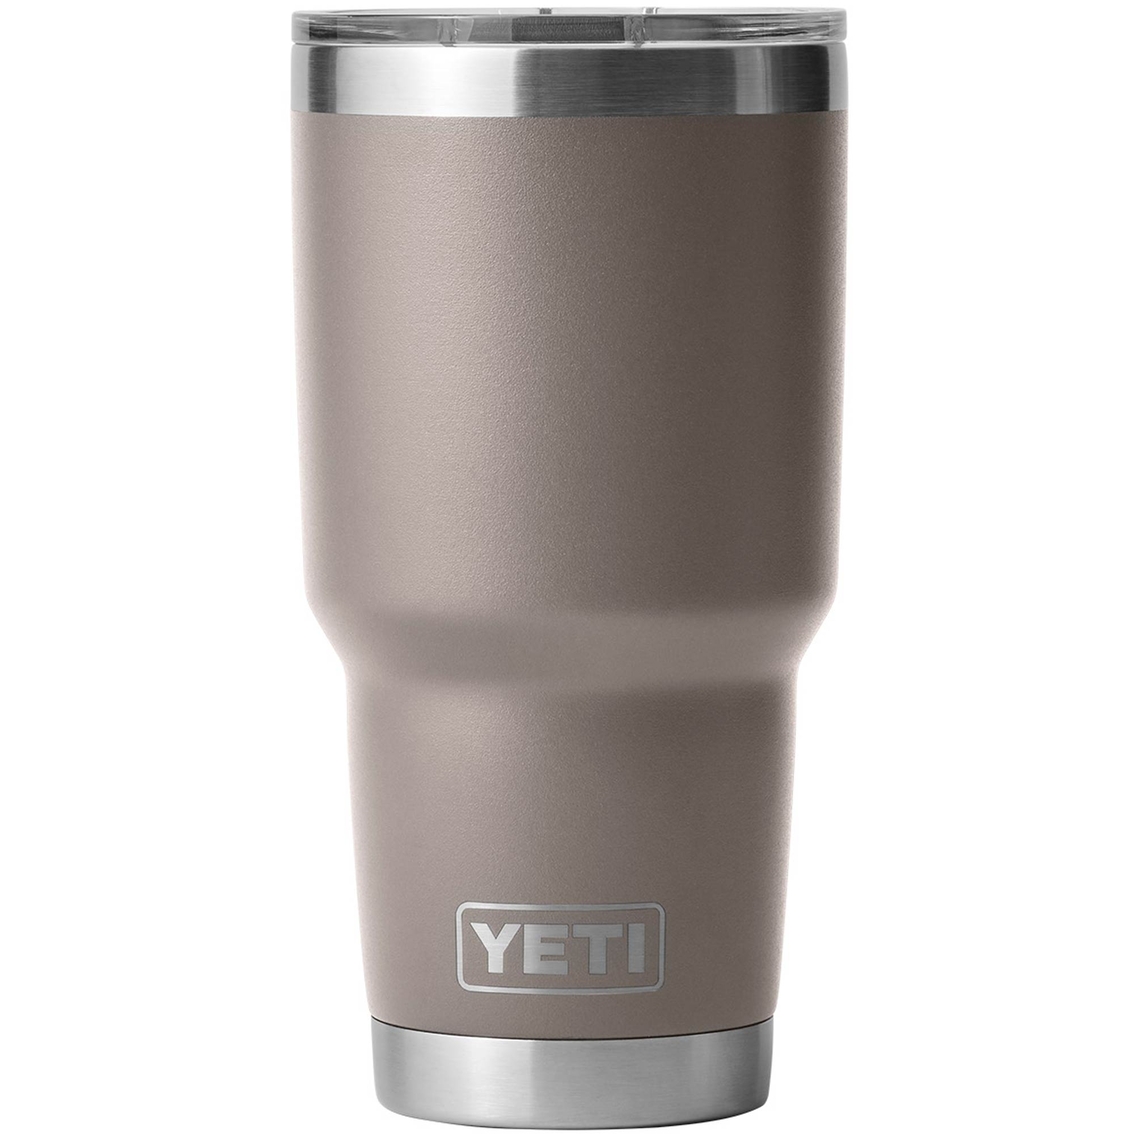 YETI Rambler 30-fl oz Stainless Steel Tumbler with MagSlider Lid, Granite  Gray at